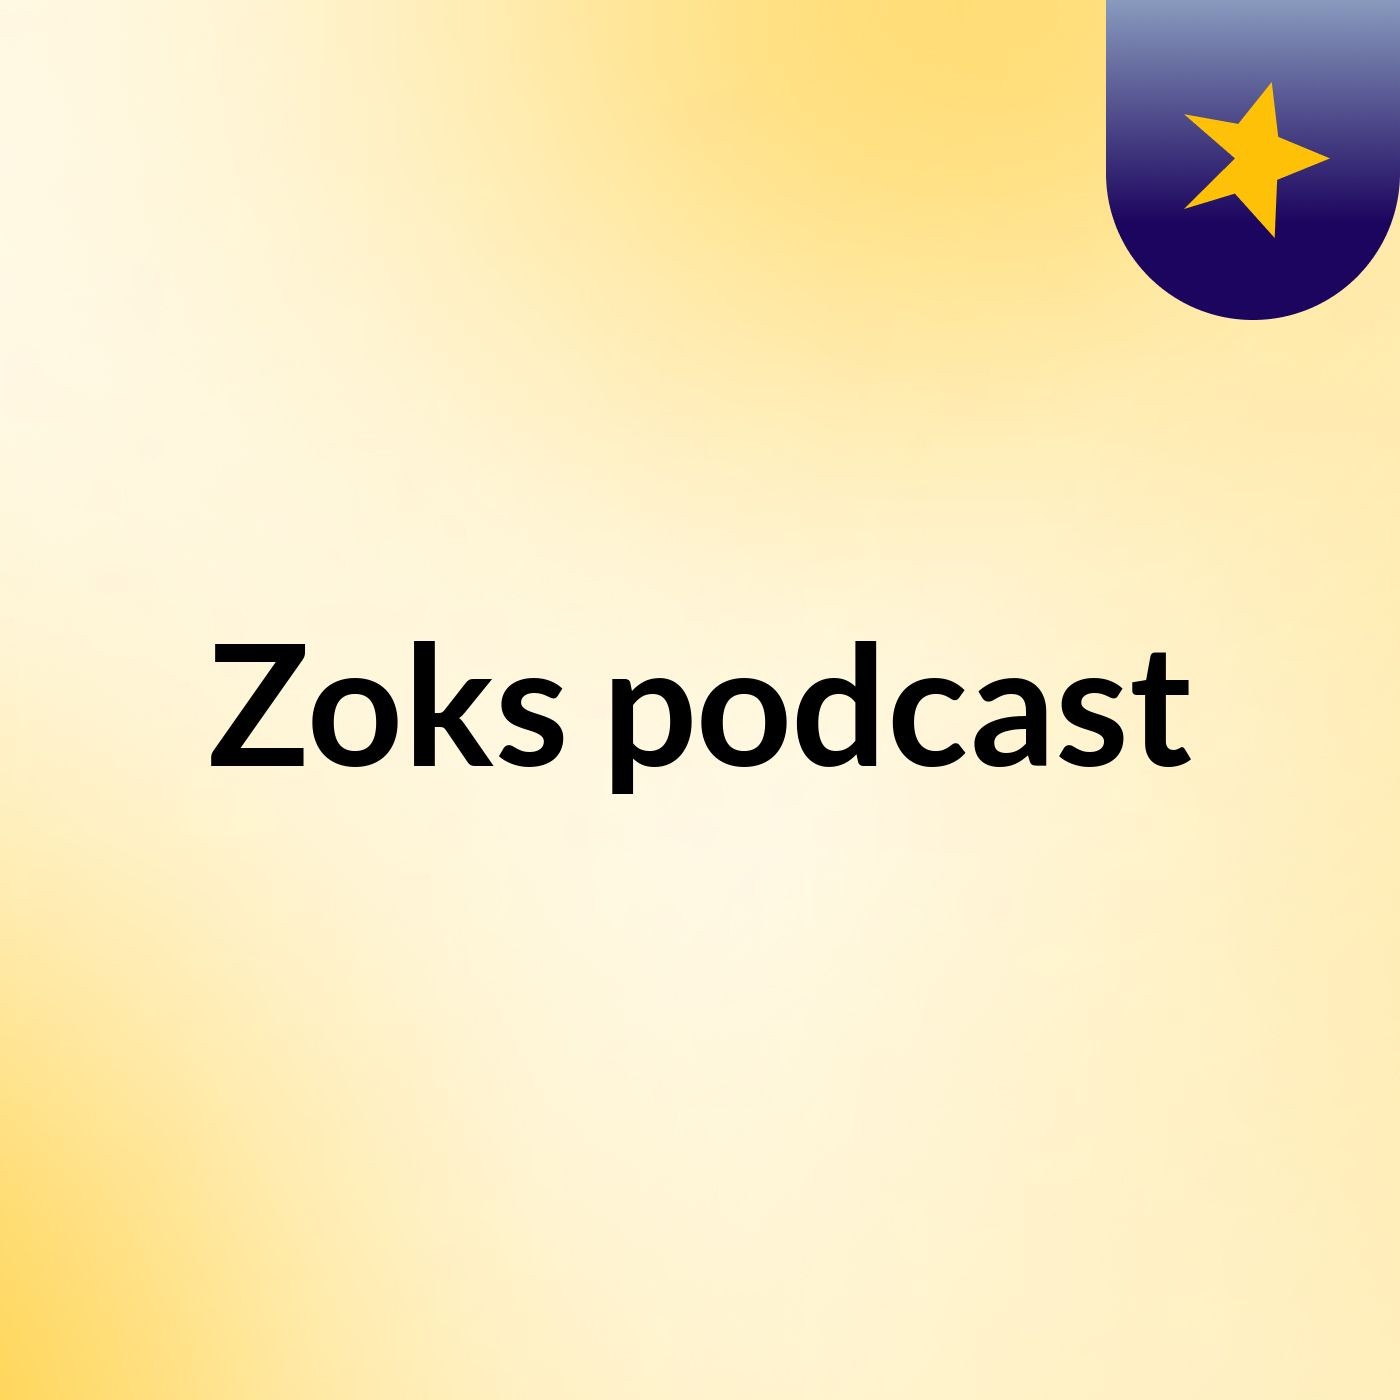 Zoks podcast